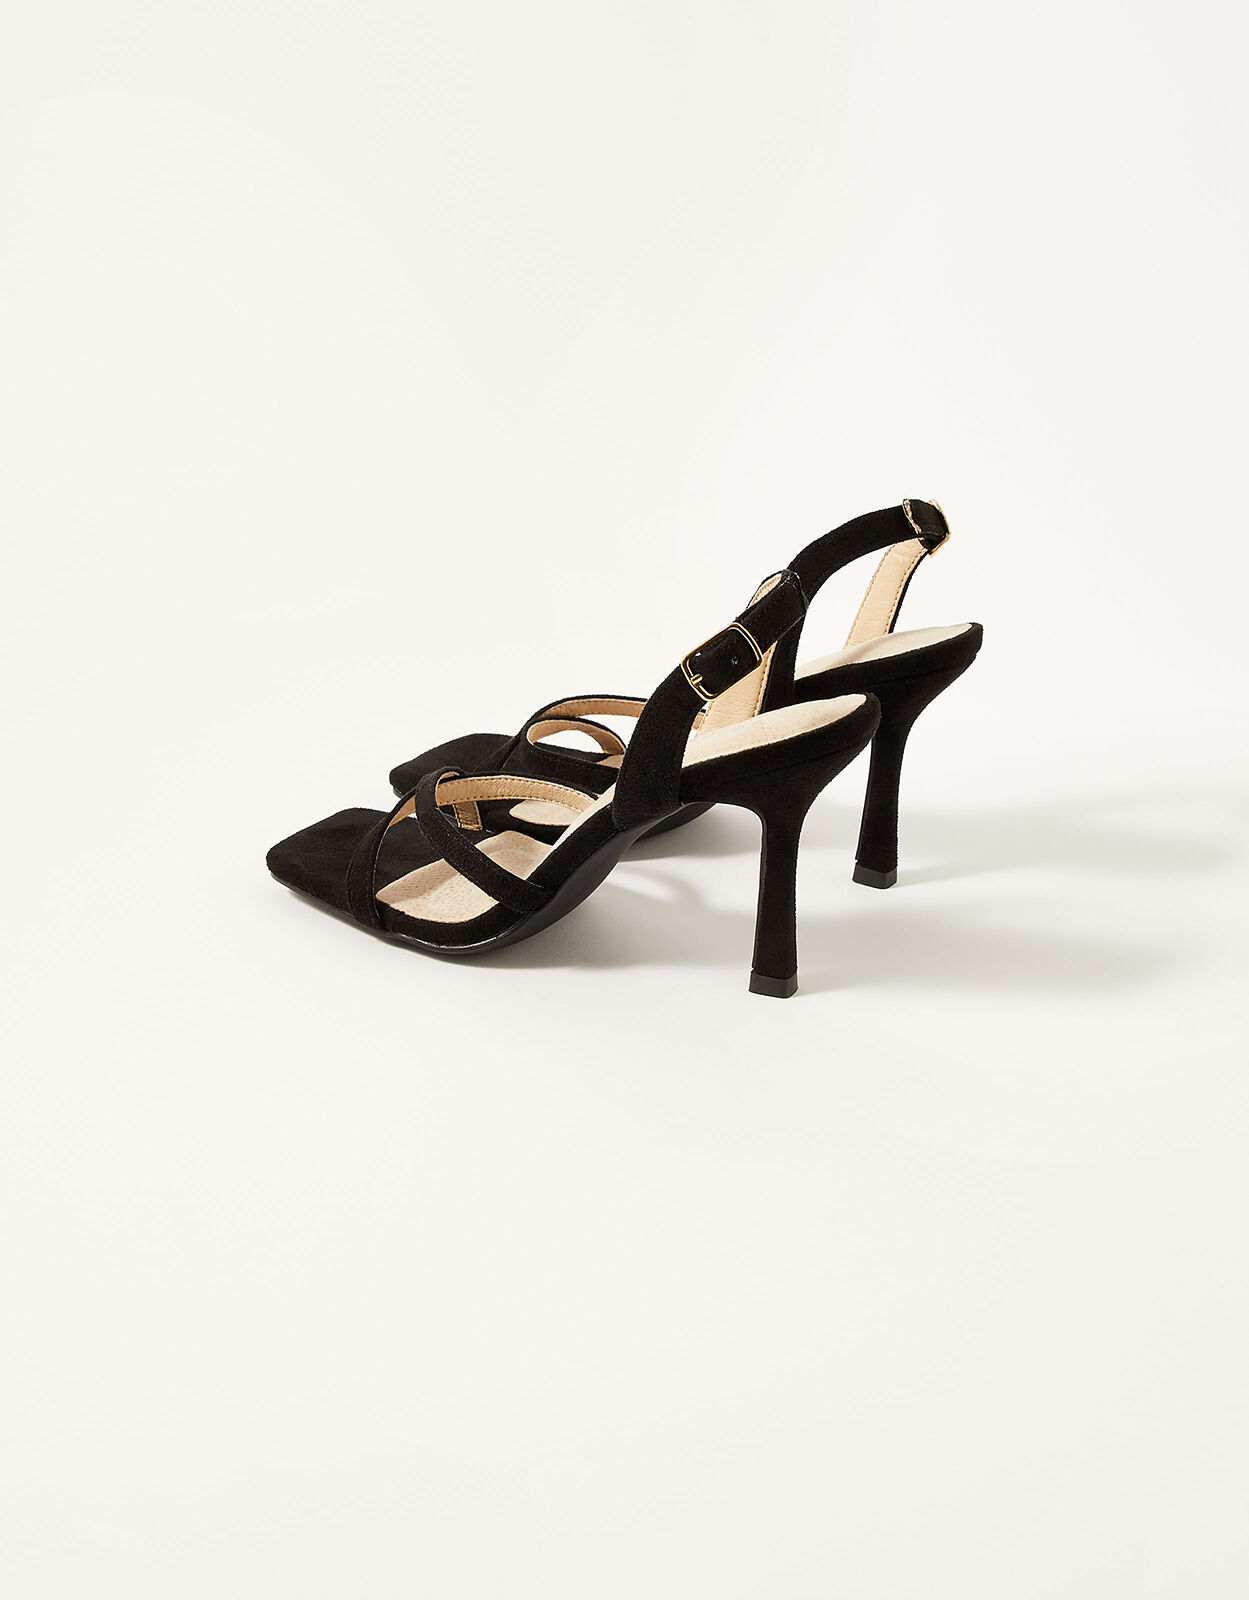 ASOS DESIGN Nova barely there heeled sandals in black | ASOS